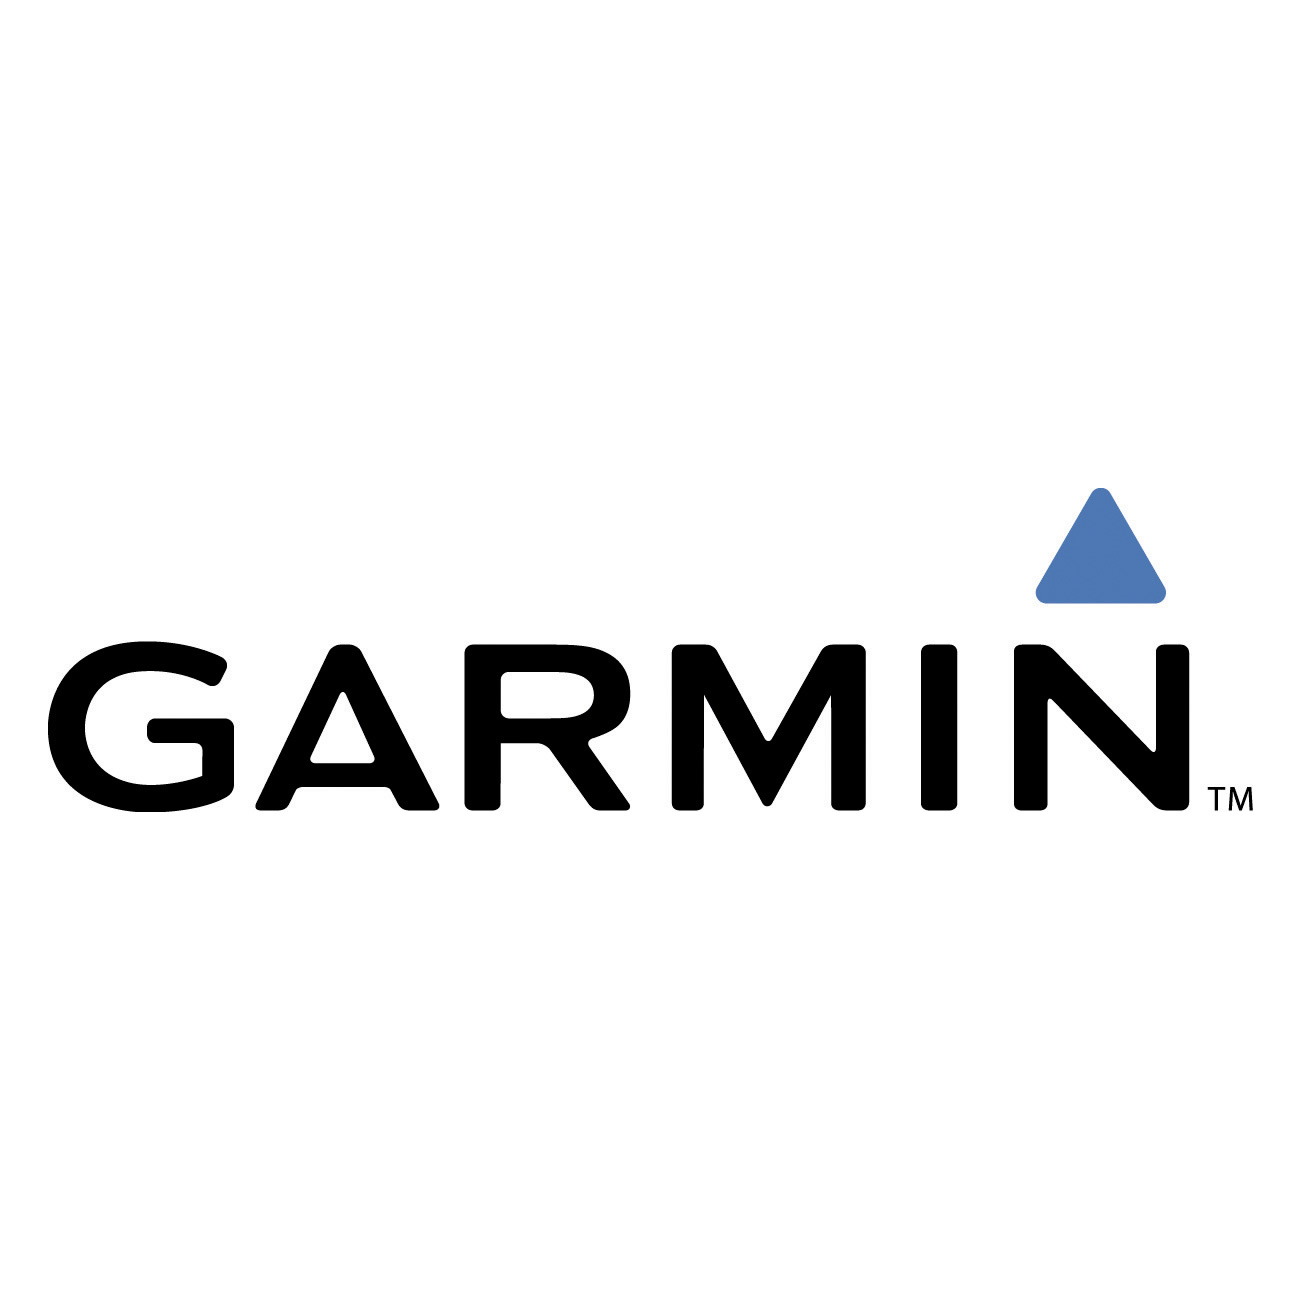 Garmin GPS Logo photo - 1